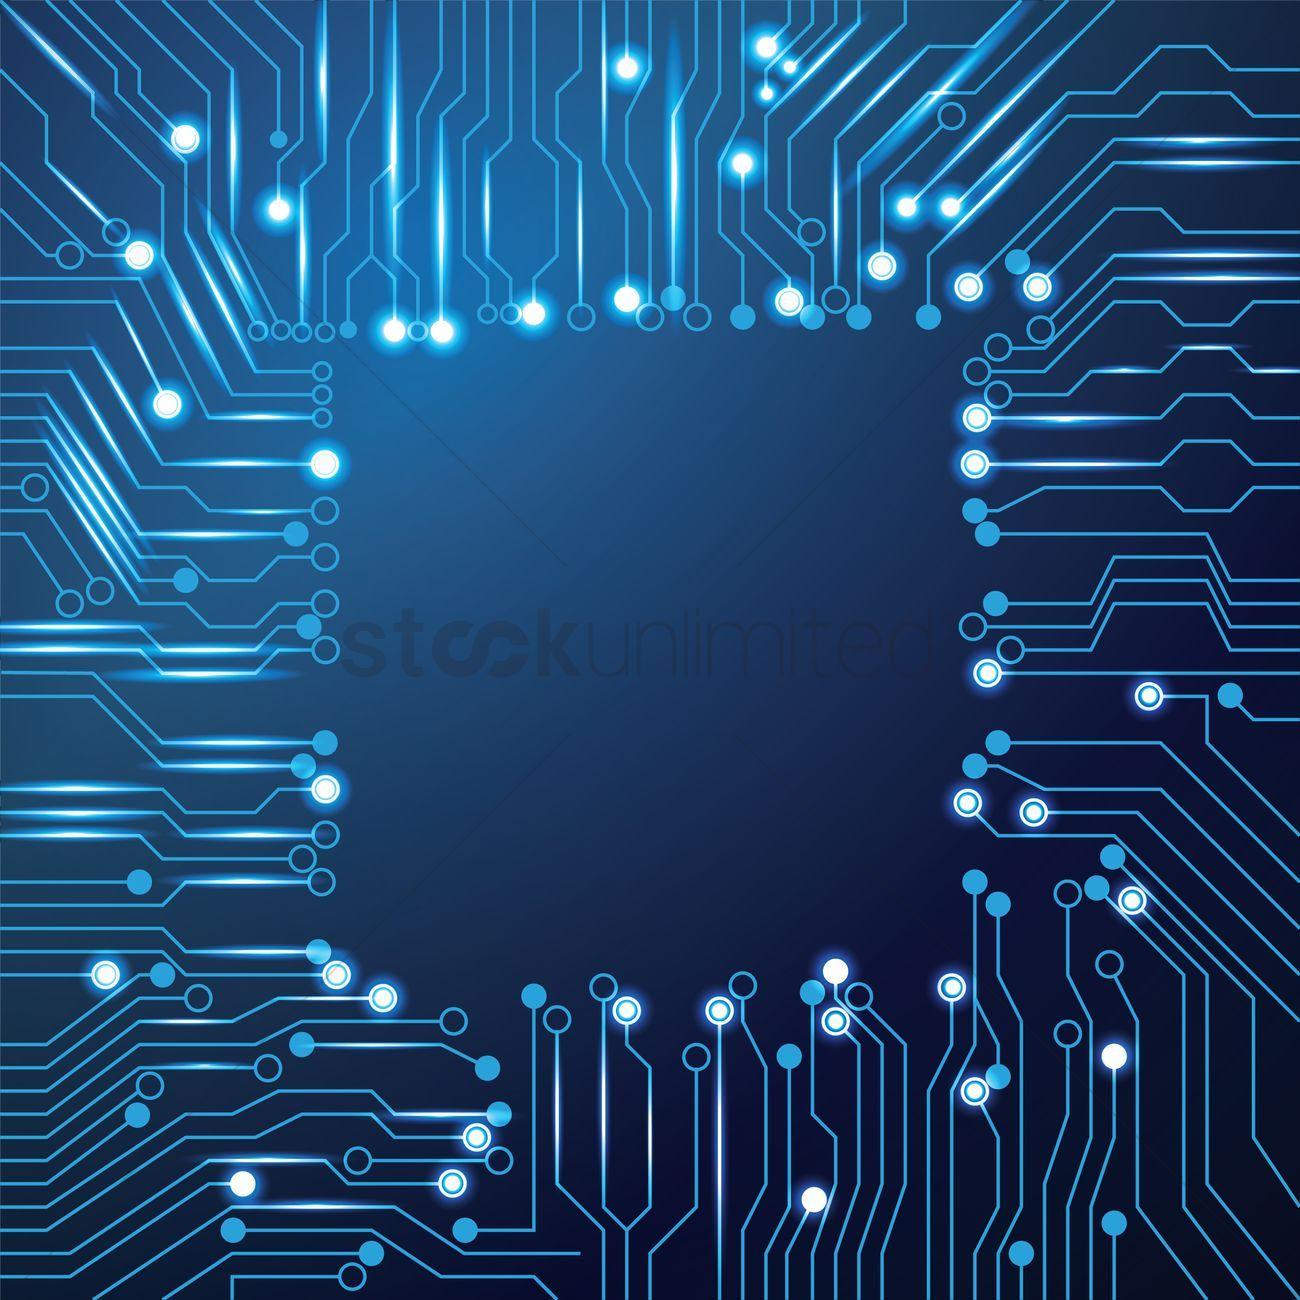 Chip design on circuit board wallpaper Vector Image